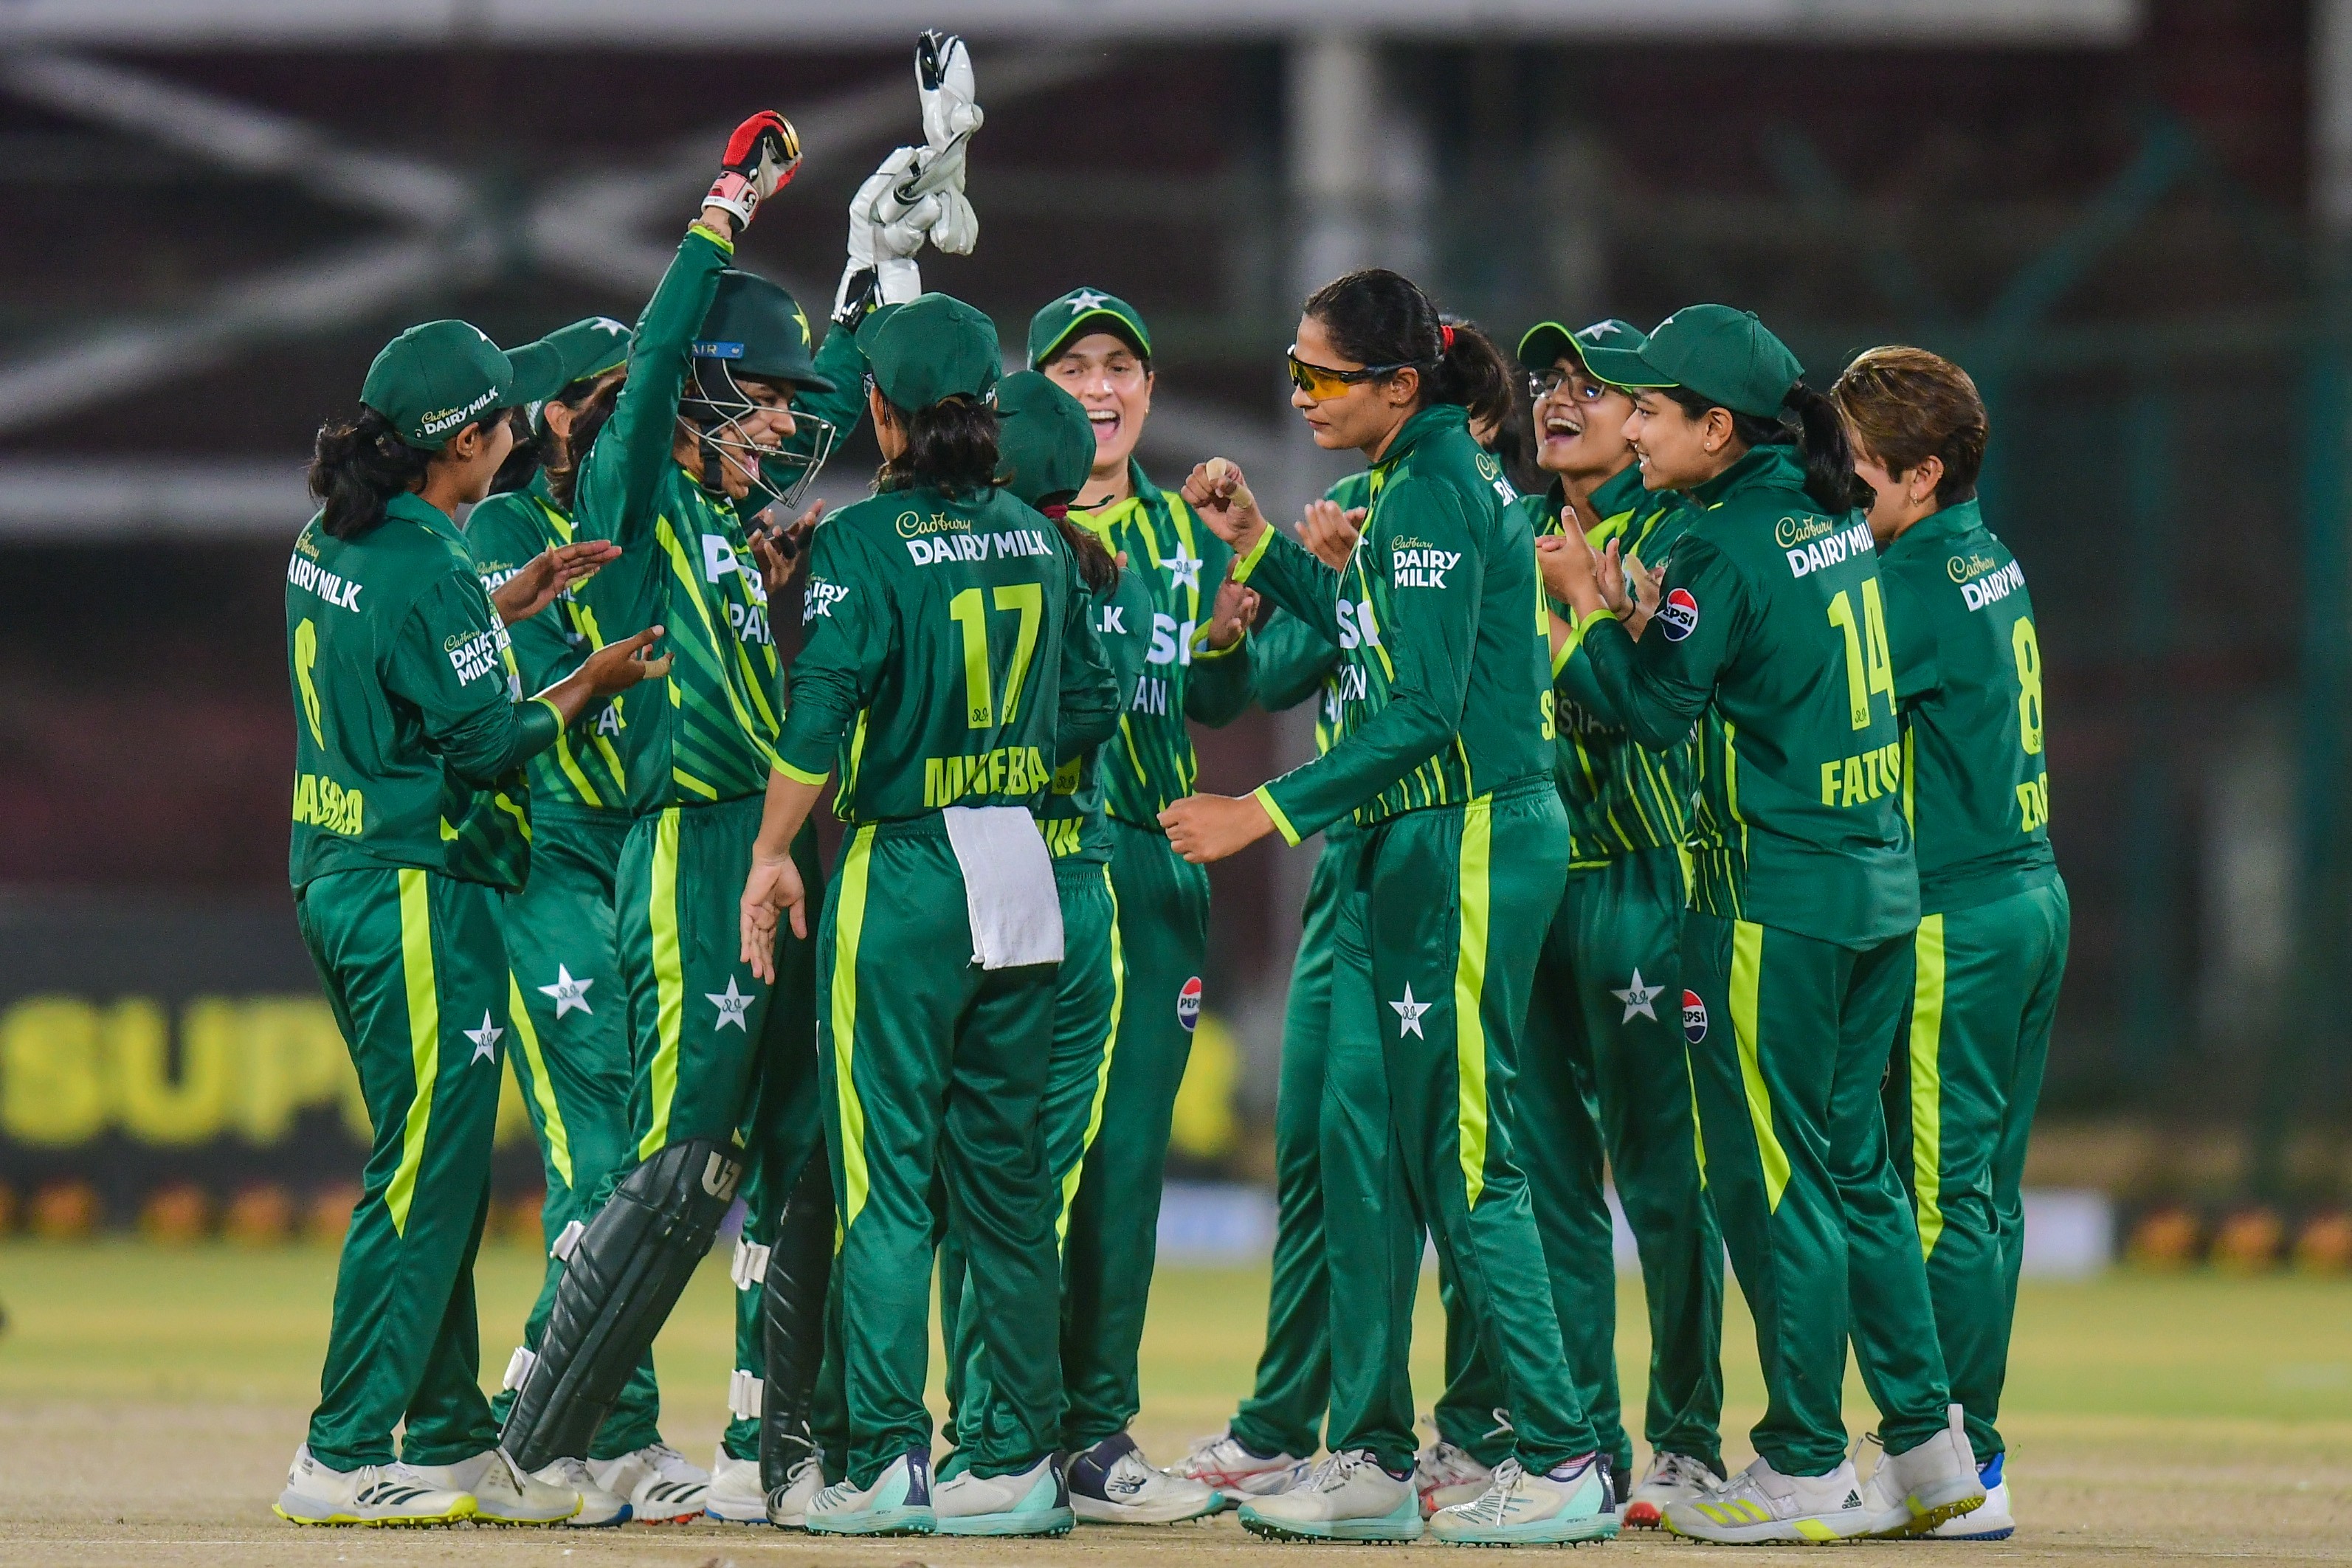 Pakistan women's team defeats WI in fourth T20I